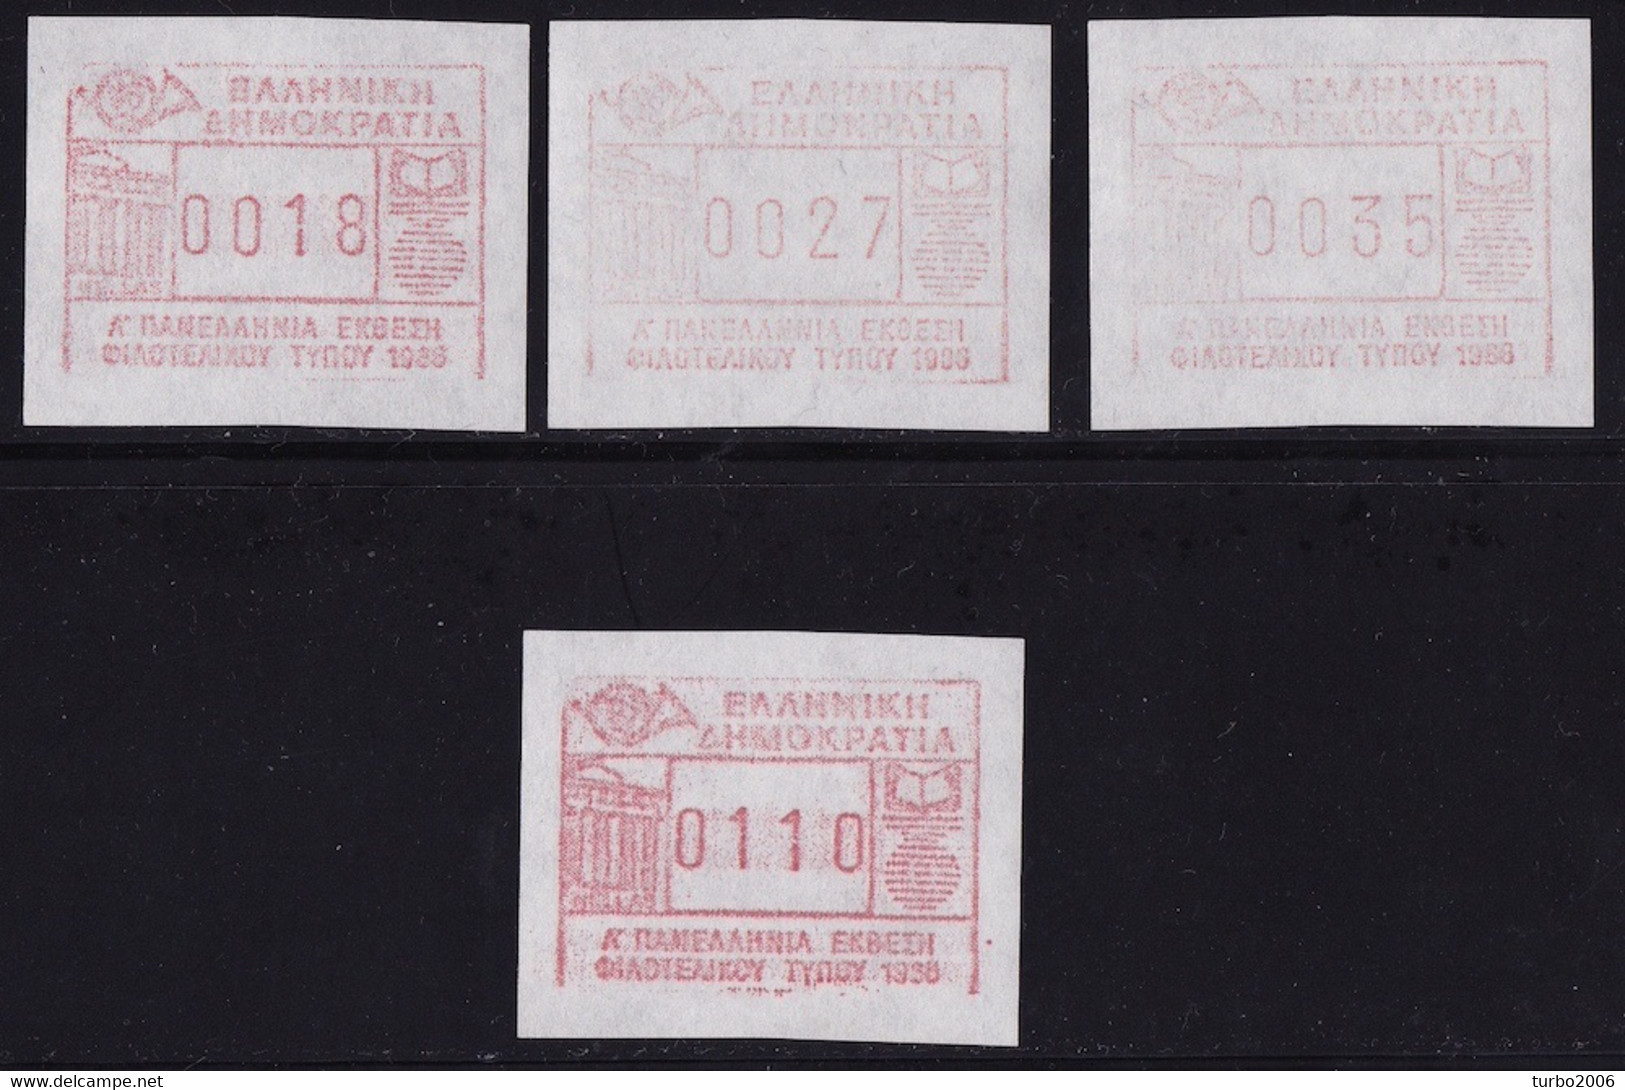 GREECE 1986 FRAMA Stamps For Panhelenic Literature Exhabition Set Of 18-27-35 DR + 110 Dr MNH Hellas M 12 - Vignette [ATM]